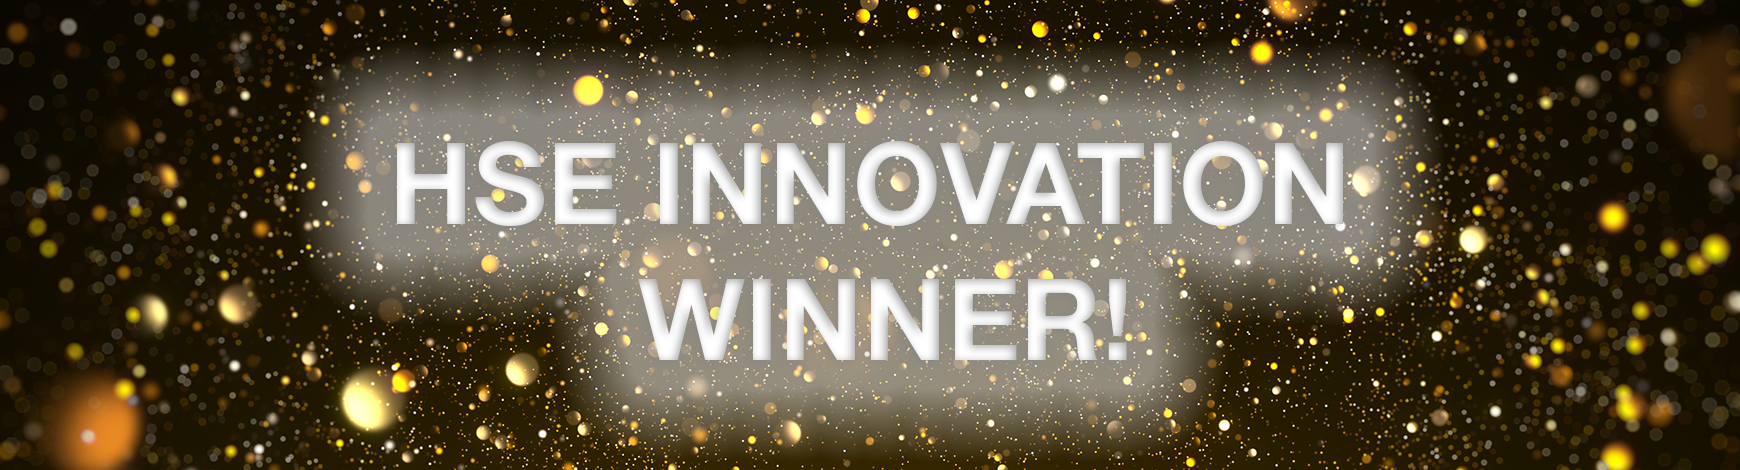 HSE innovation winner OAA 2020 banner.png